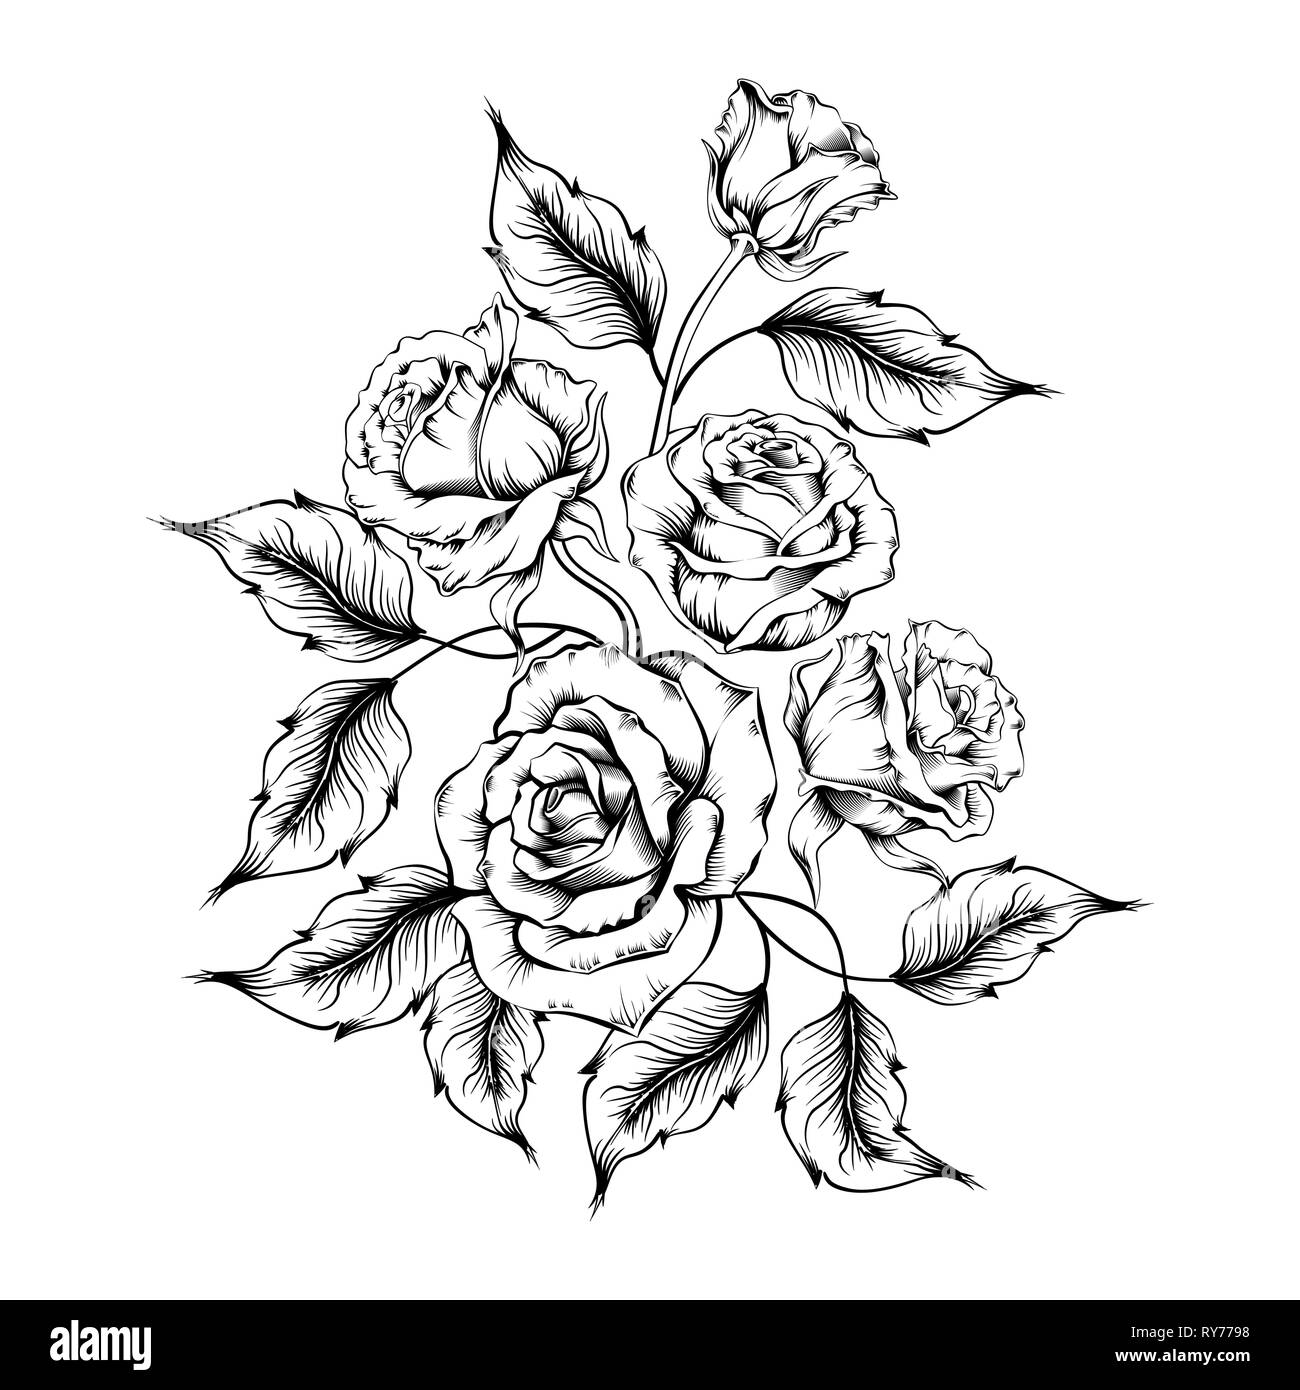 Top Rose Tattoo Stencil Designs Pictures Stock Vectors Illustrations   Clip Art  iStock